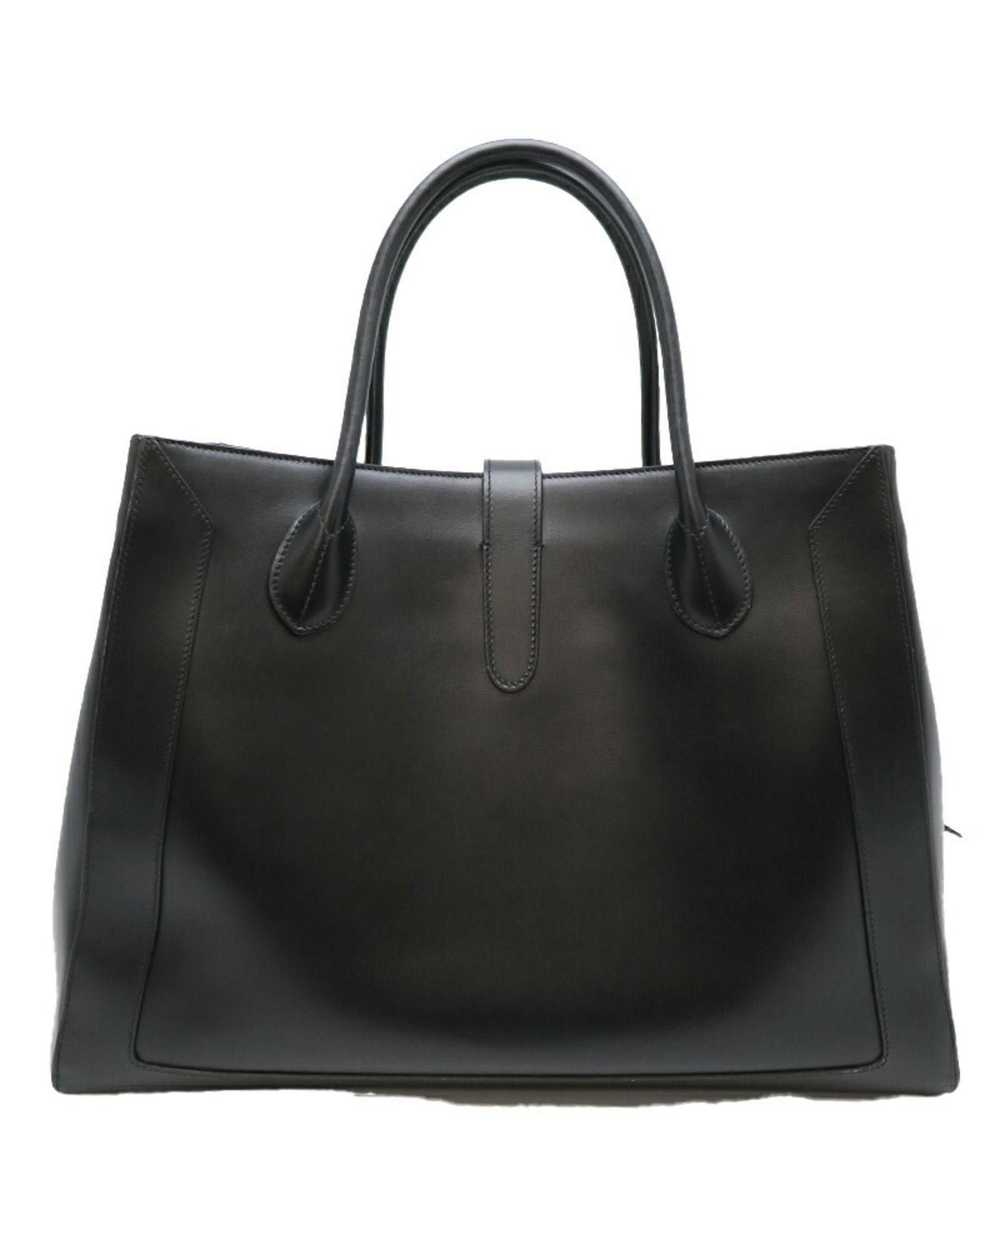 Gucci Timeless Black Leather Handbag - image 2